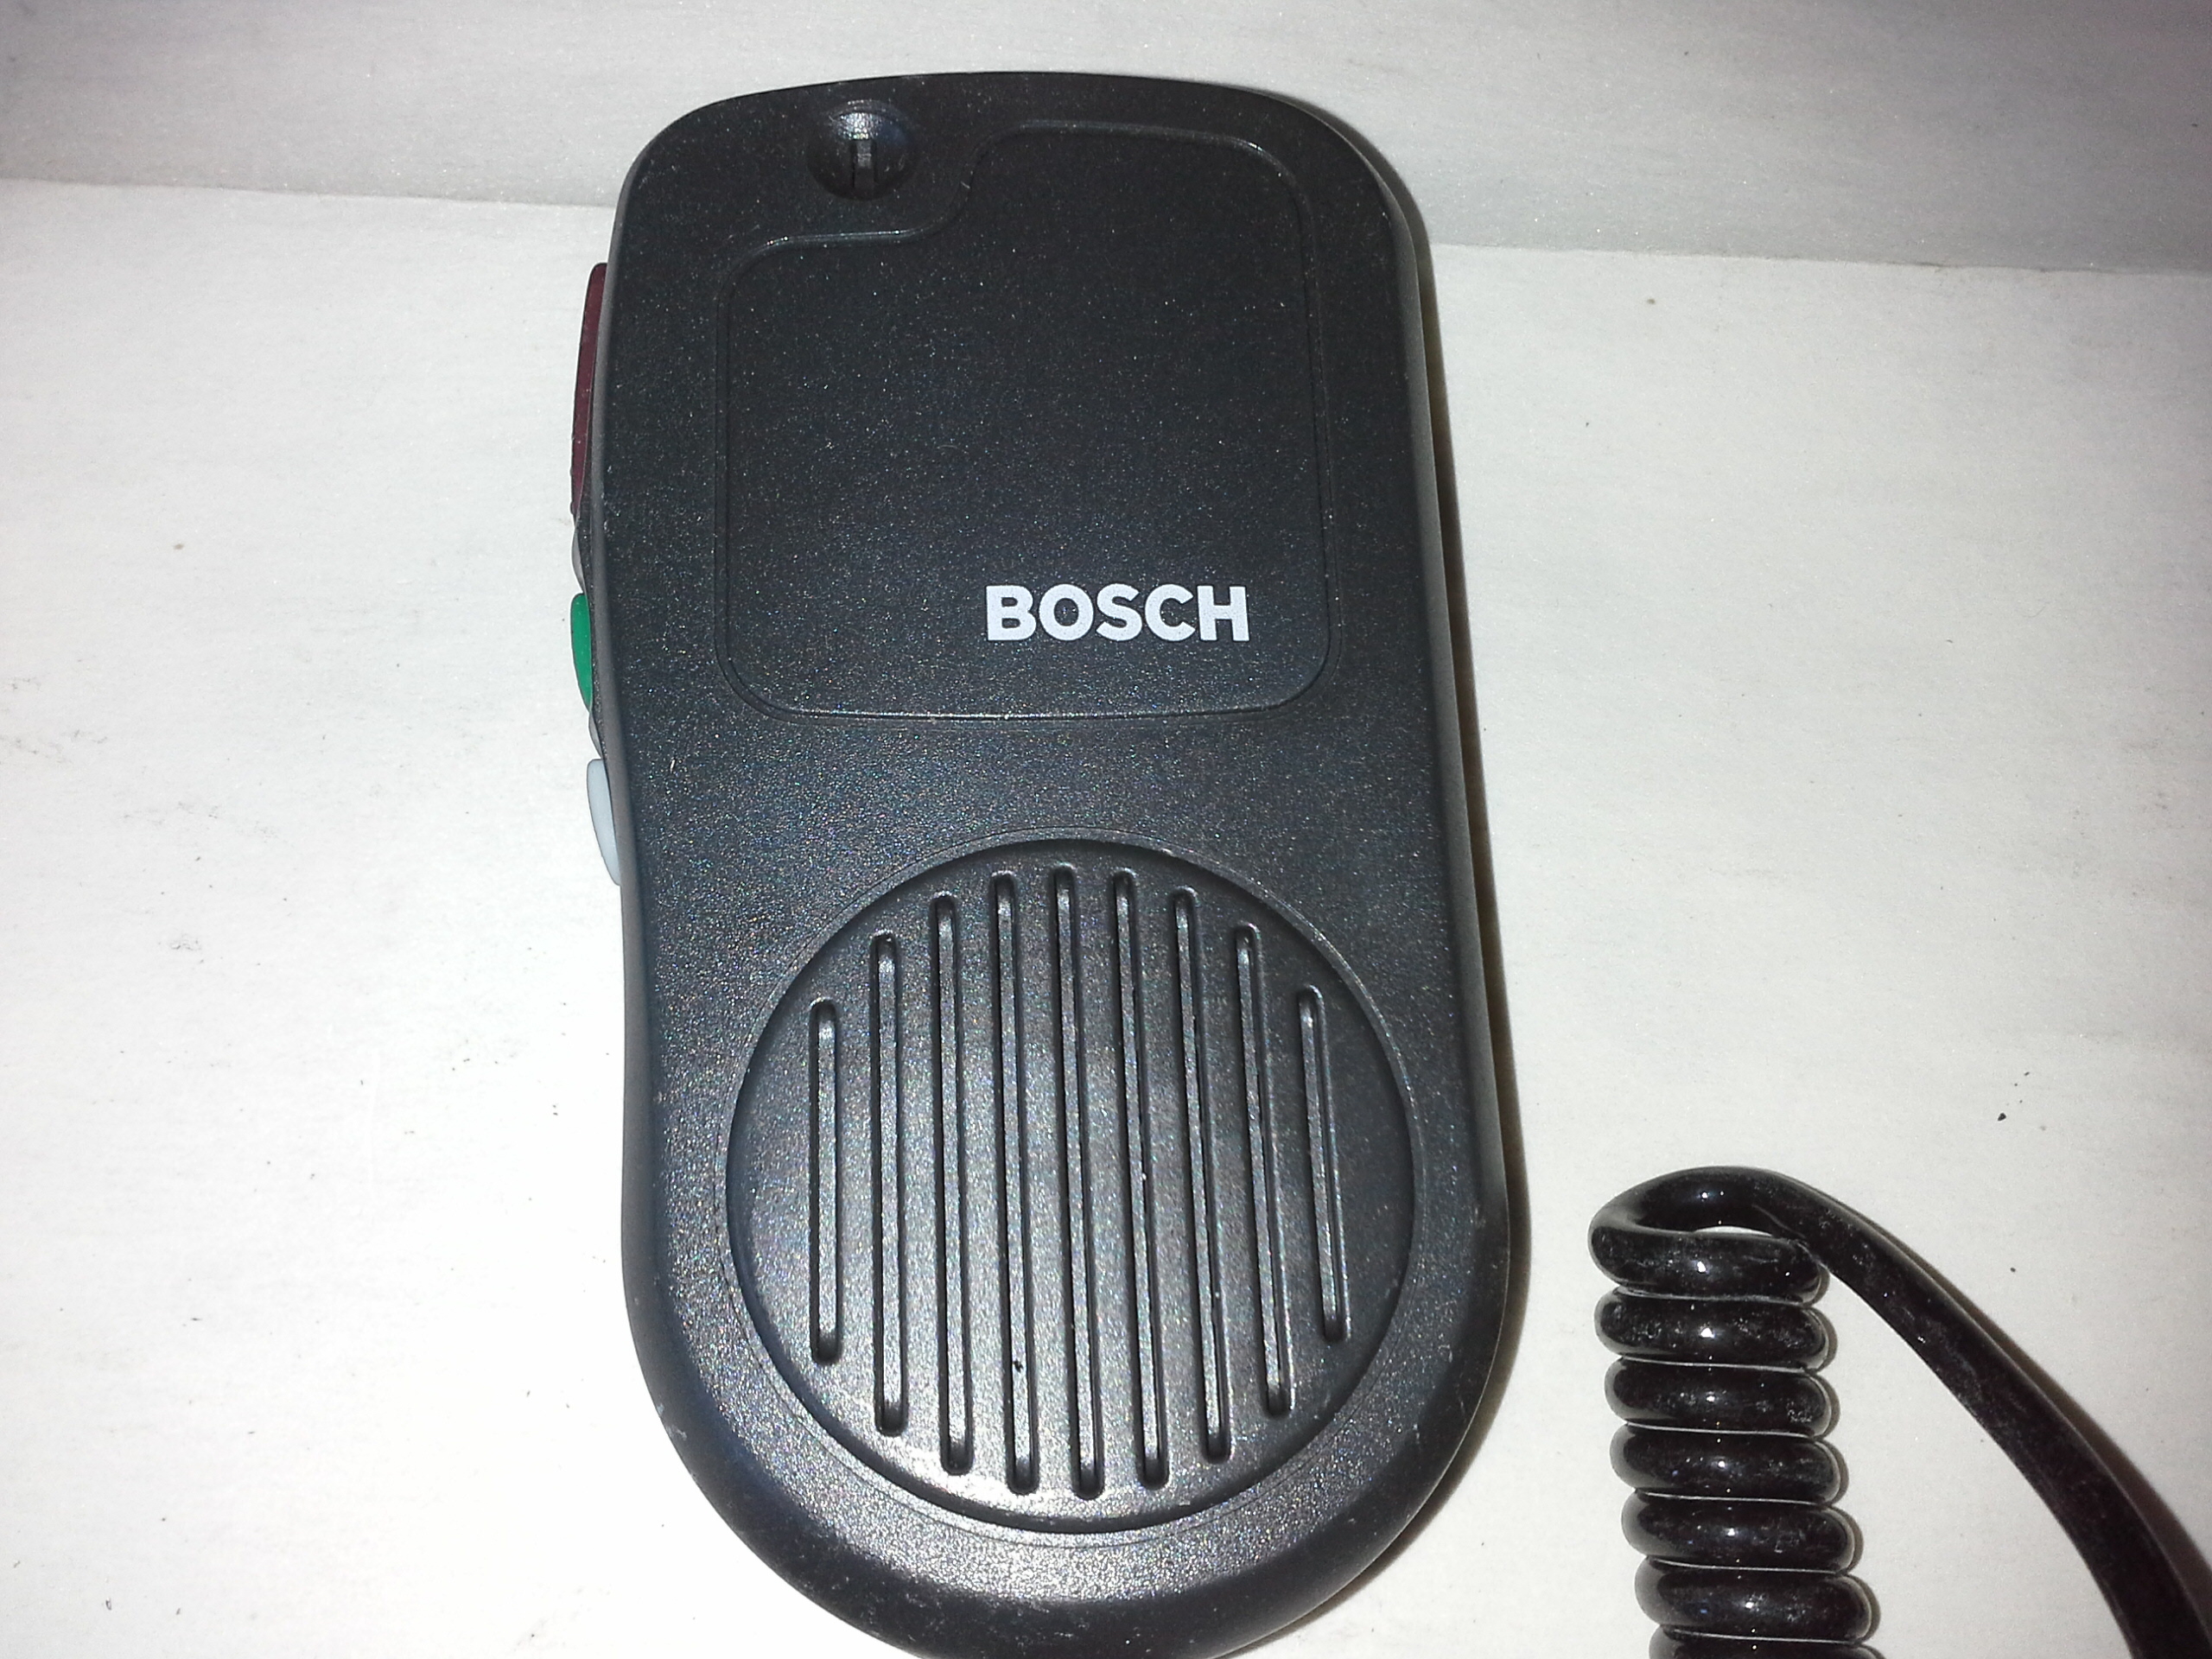 Bosch Handsprechapparat ML 11